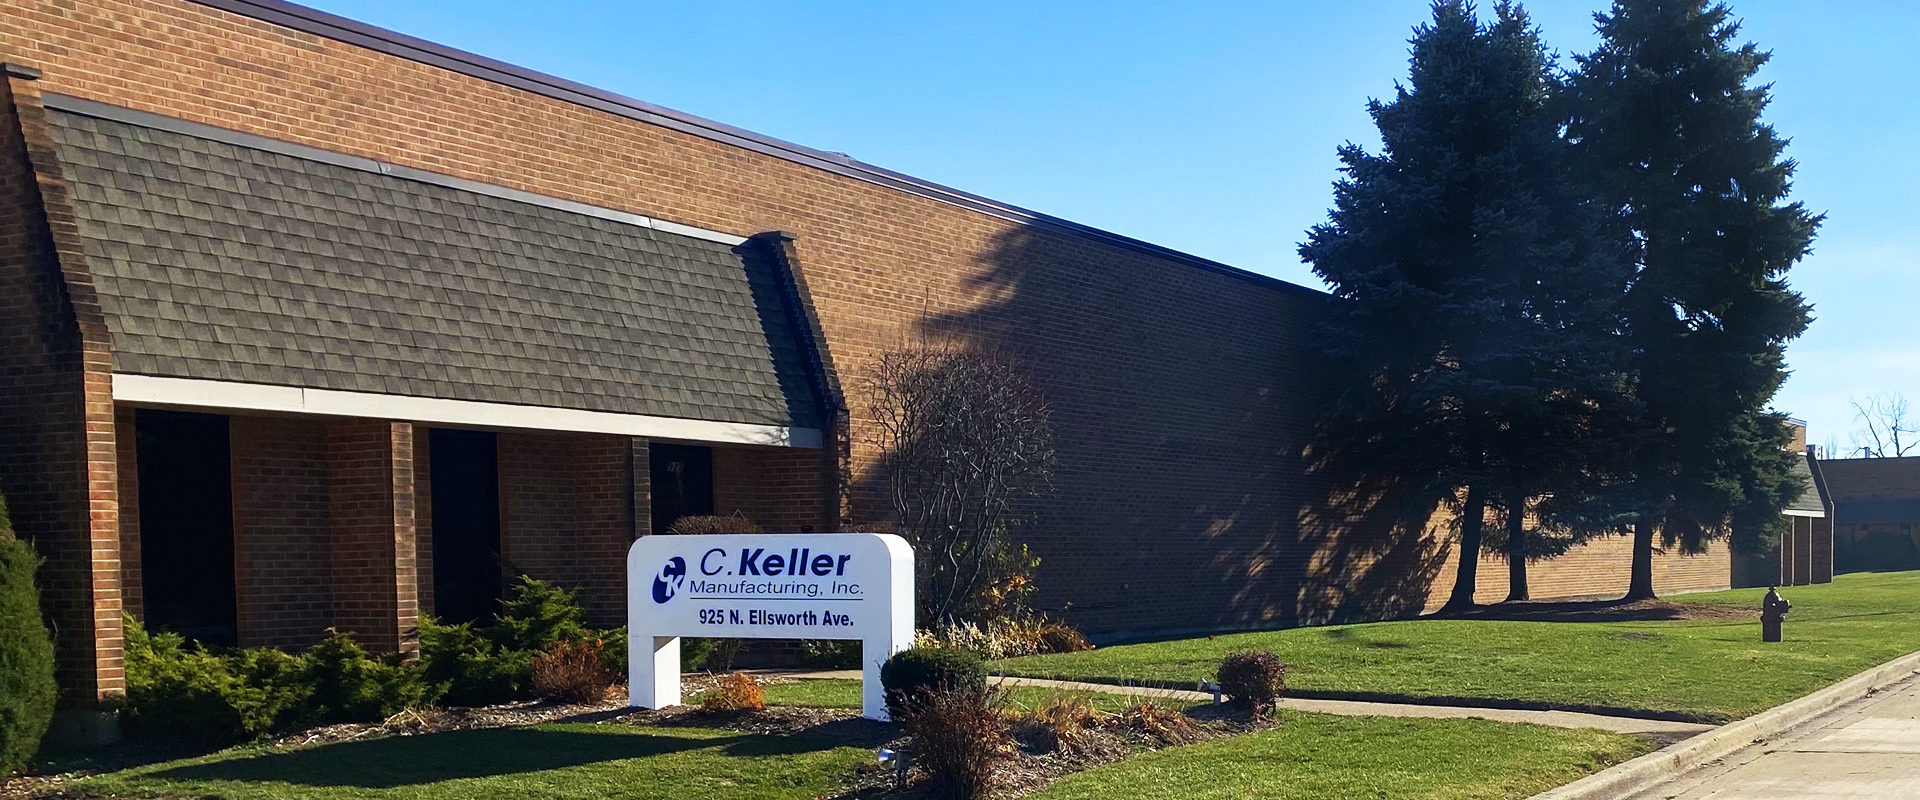 C. Keller Manufacturing Building